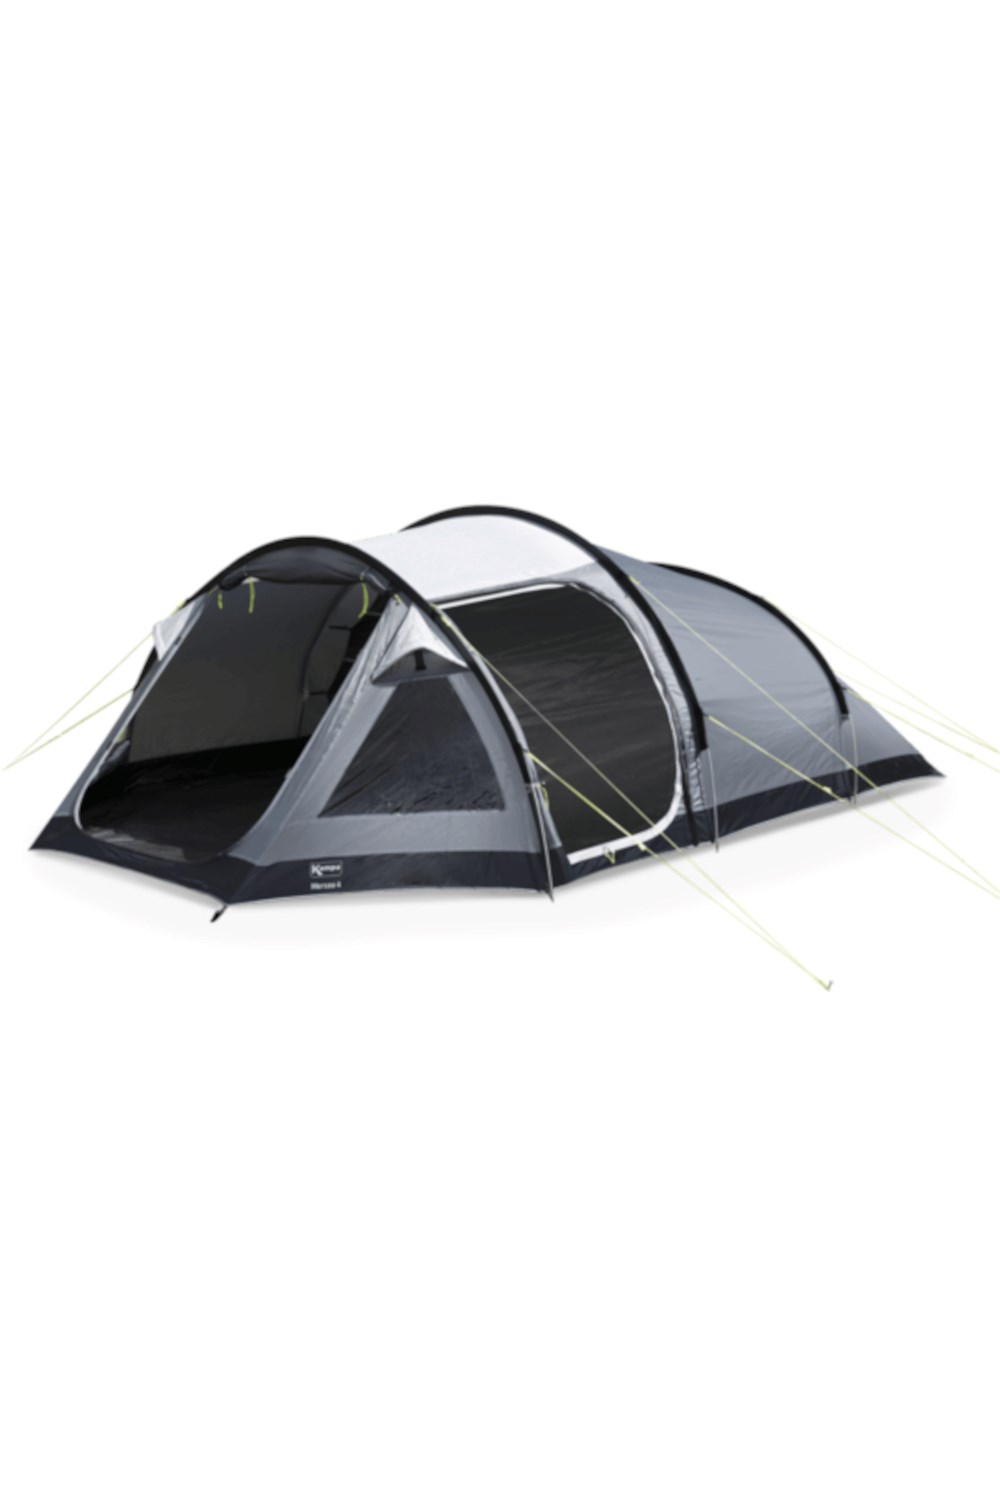 Mersea 4 Man Poled Camping Tent -